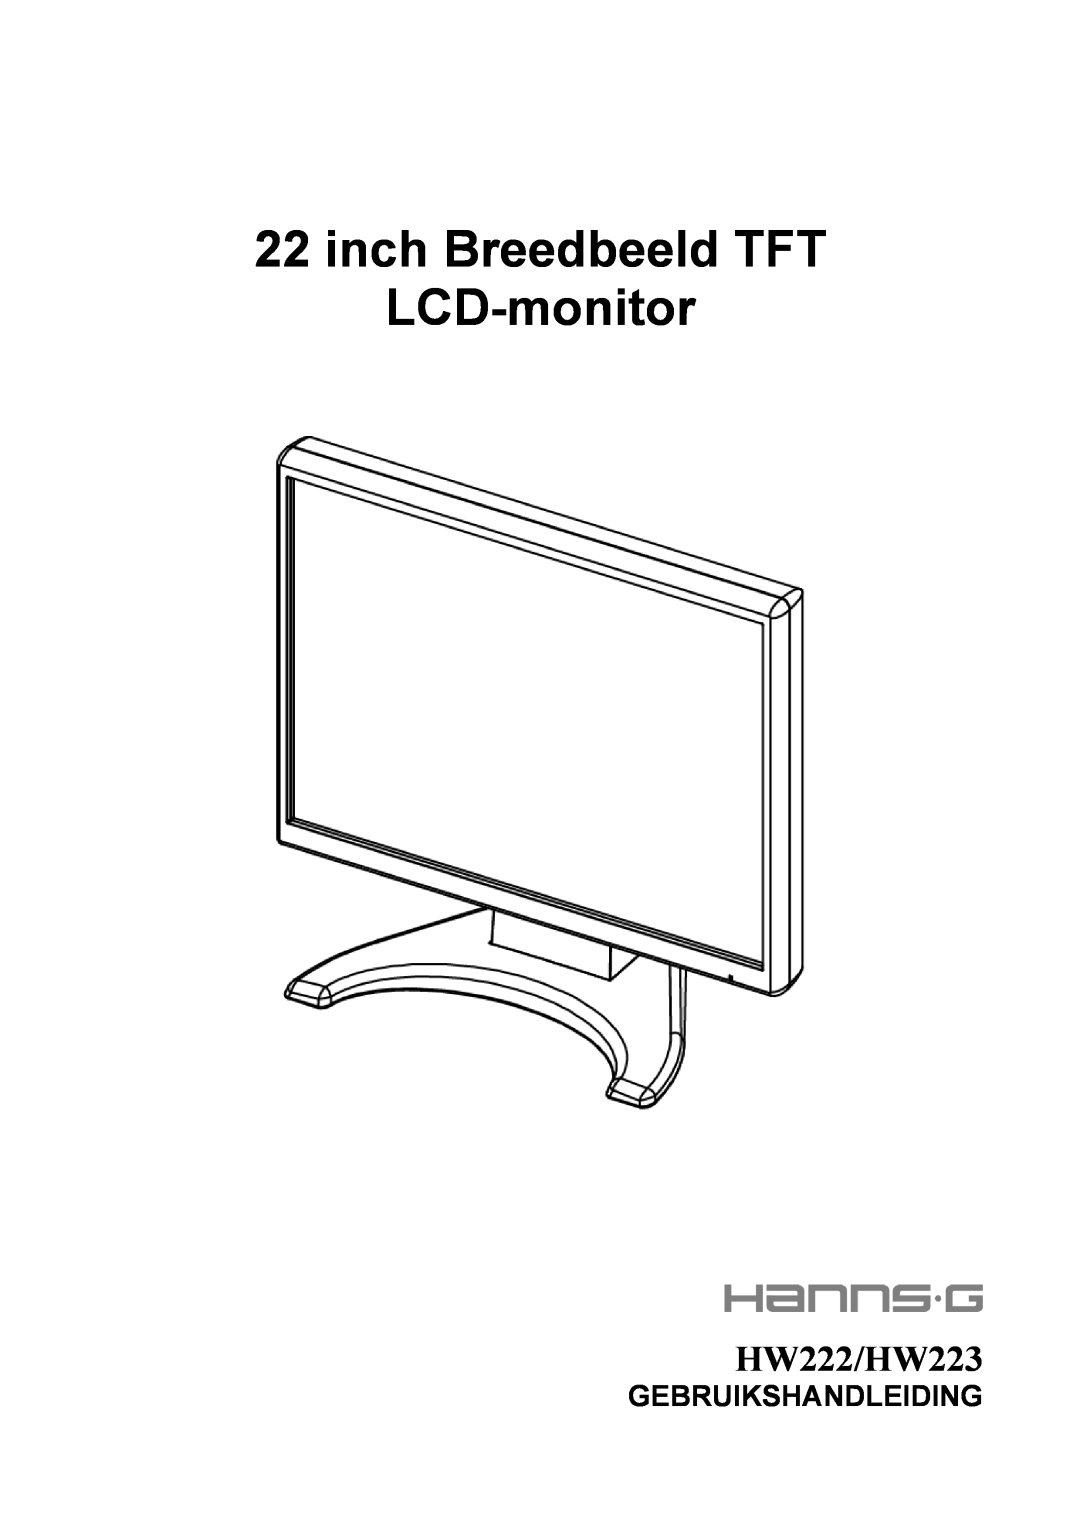 Hanns.G manual Gebruikshandleiding, inch Breedbeeld TFT LCD-monitor, HW222/HW223 